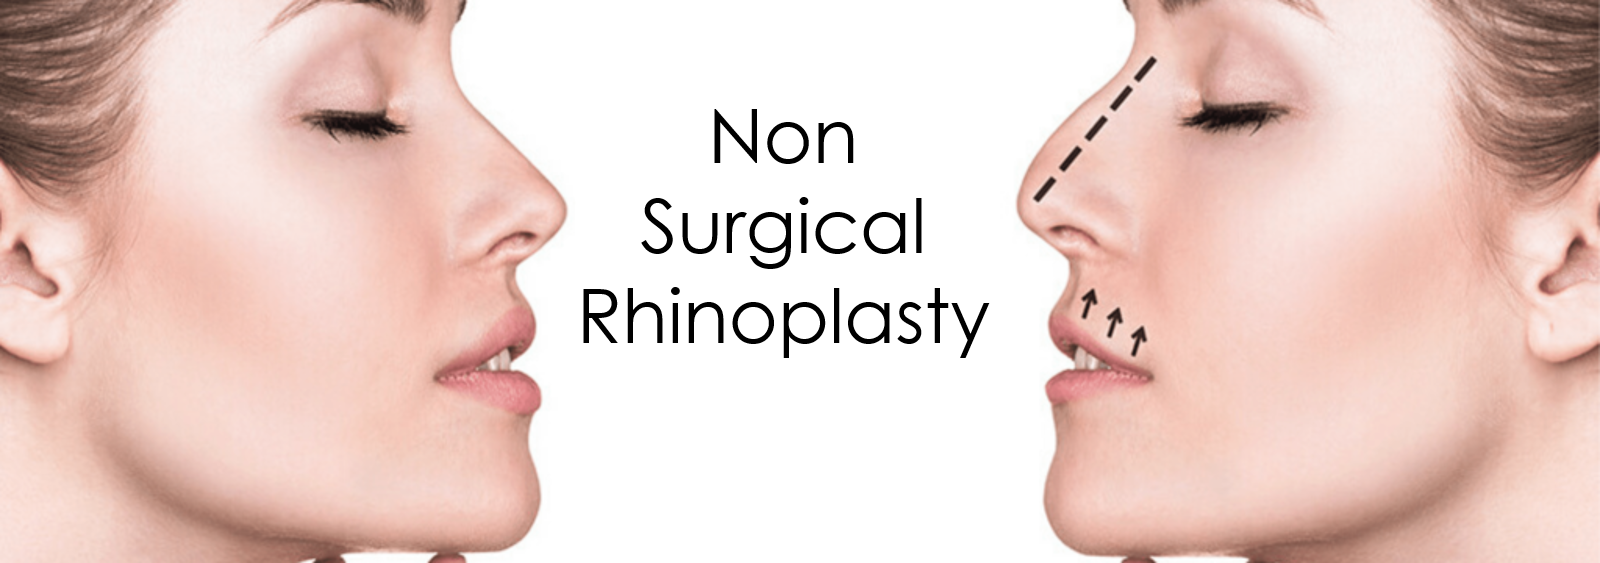 Non Surgical Rhinoplasty